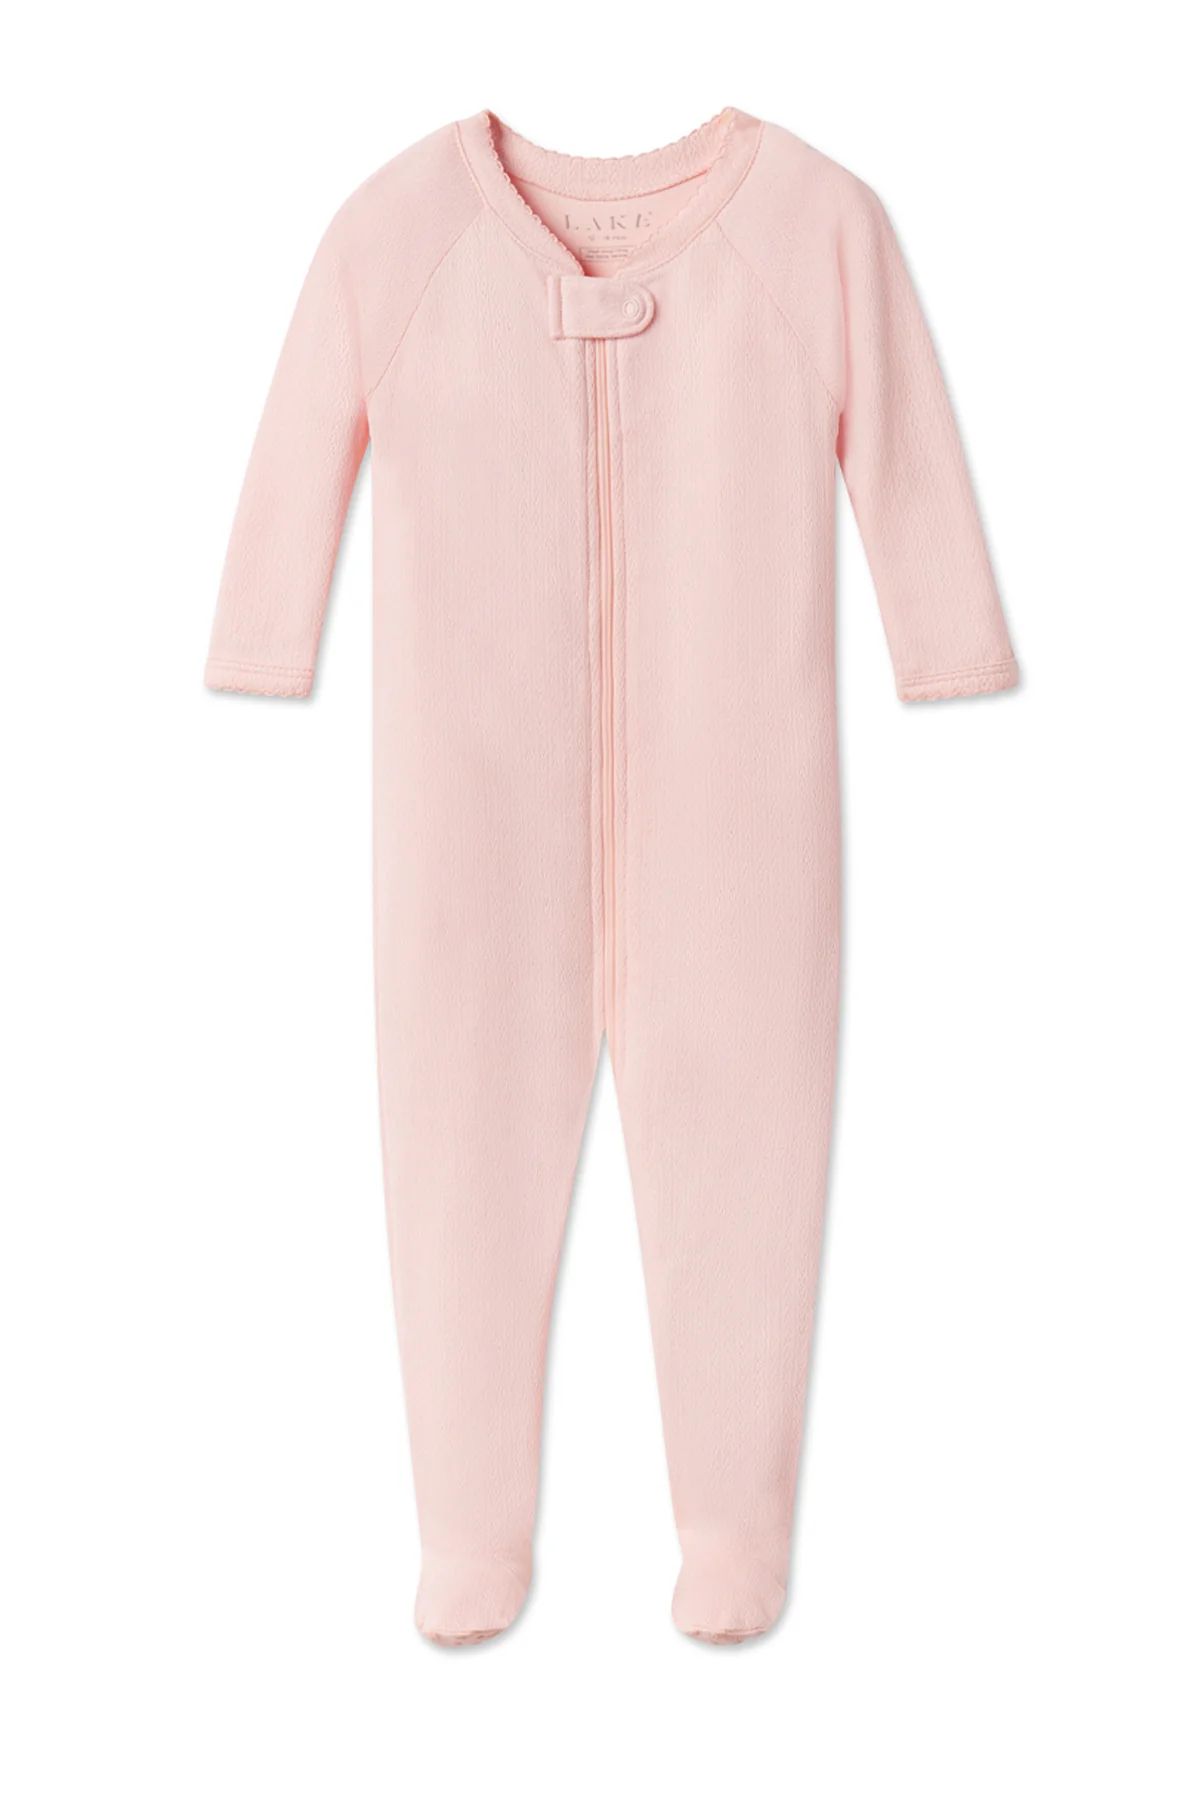 Baby Pointelle Footed Sleeper in English Rose | Lake Pajamas